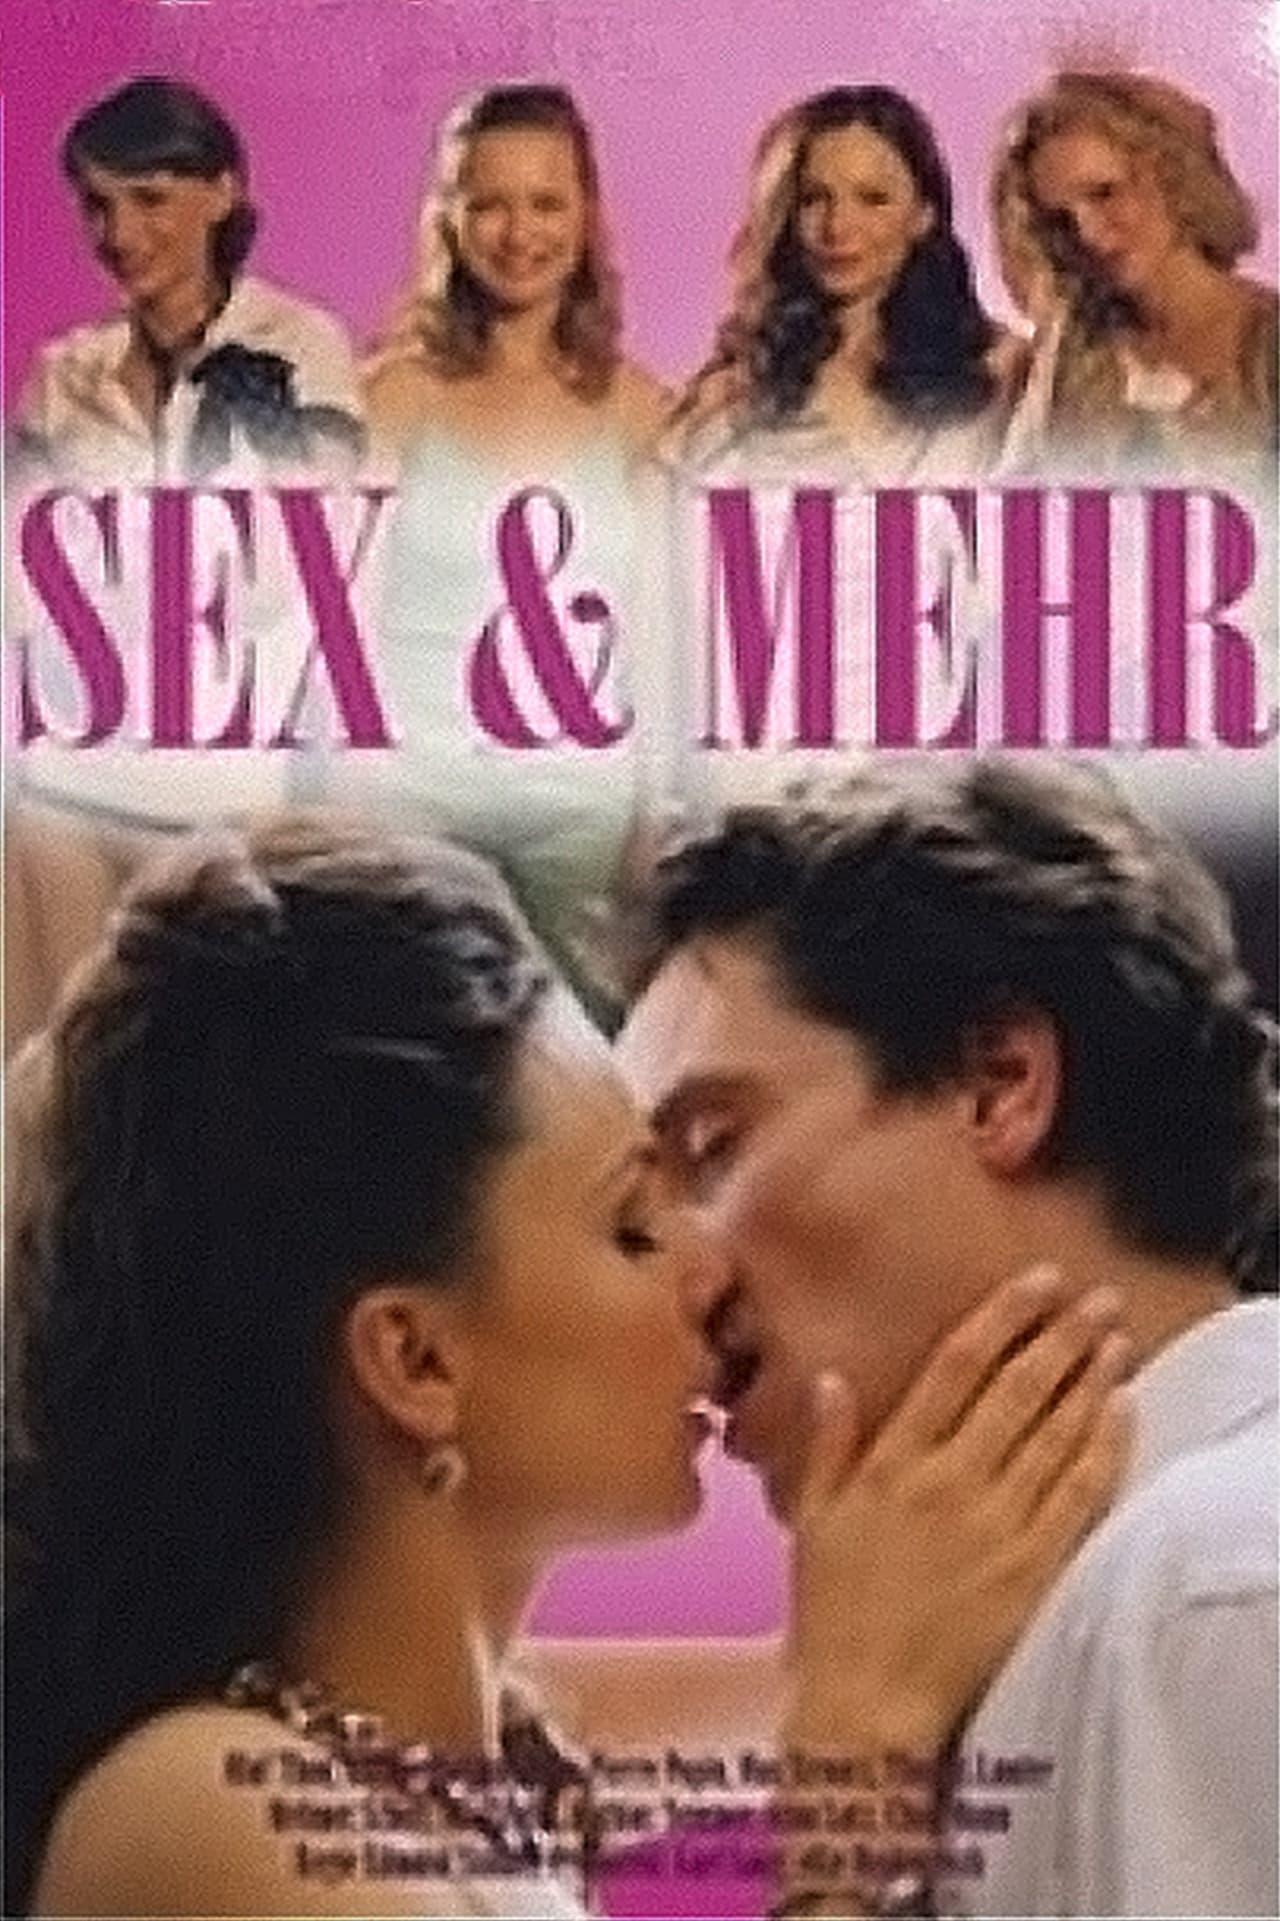 Sex & mehr poster